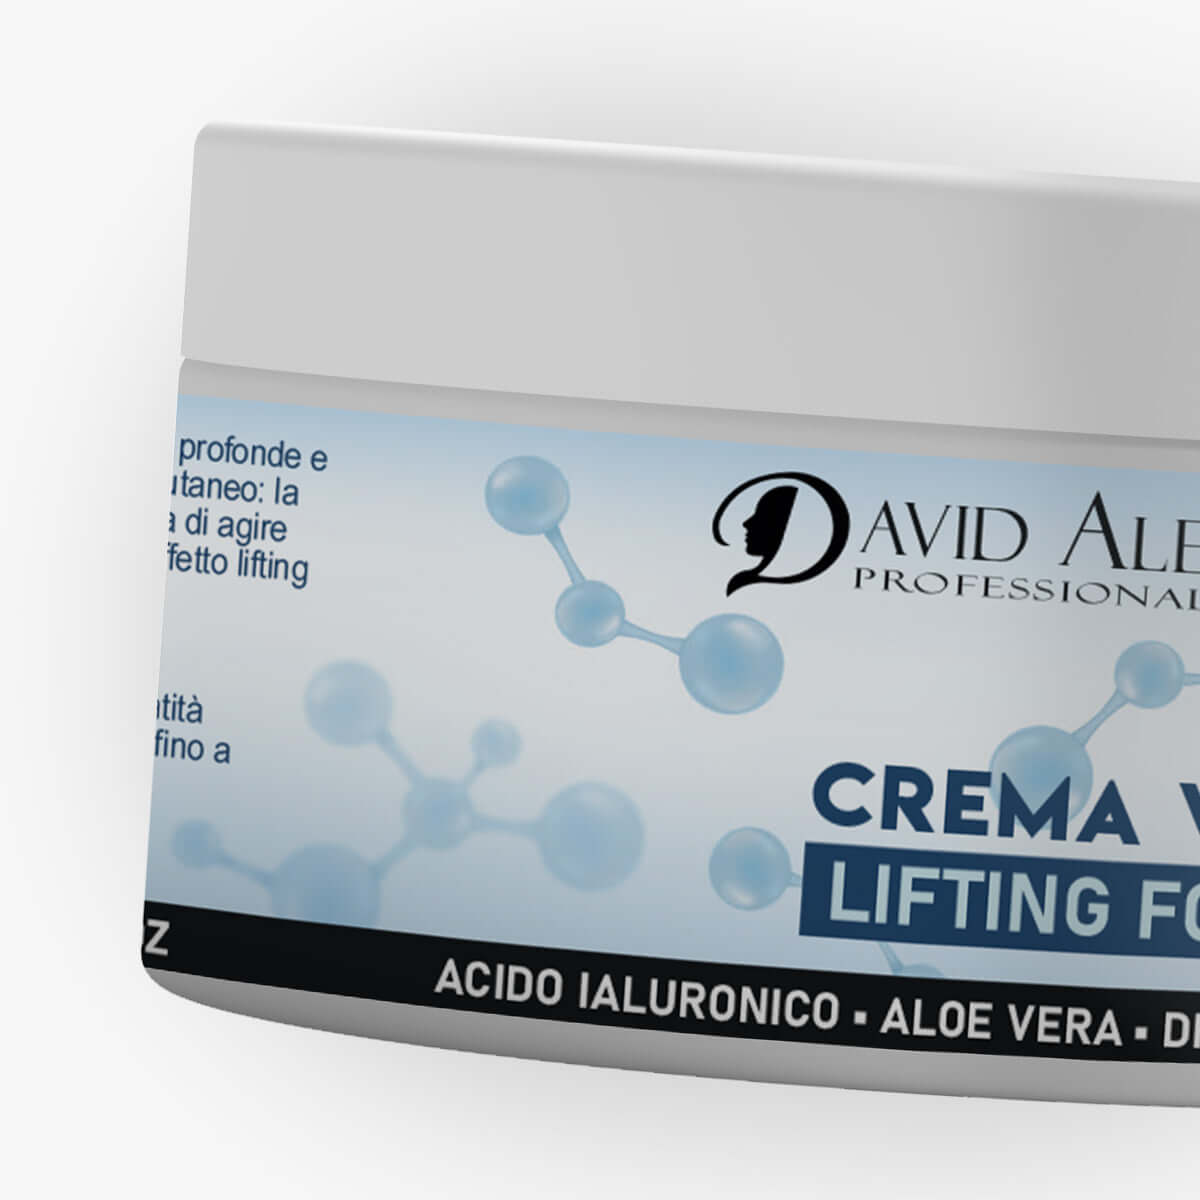 CREMA LIFTING FORTE - david alexander professional cosmetics